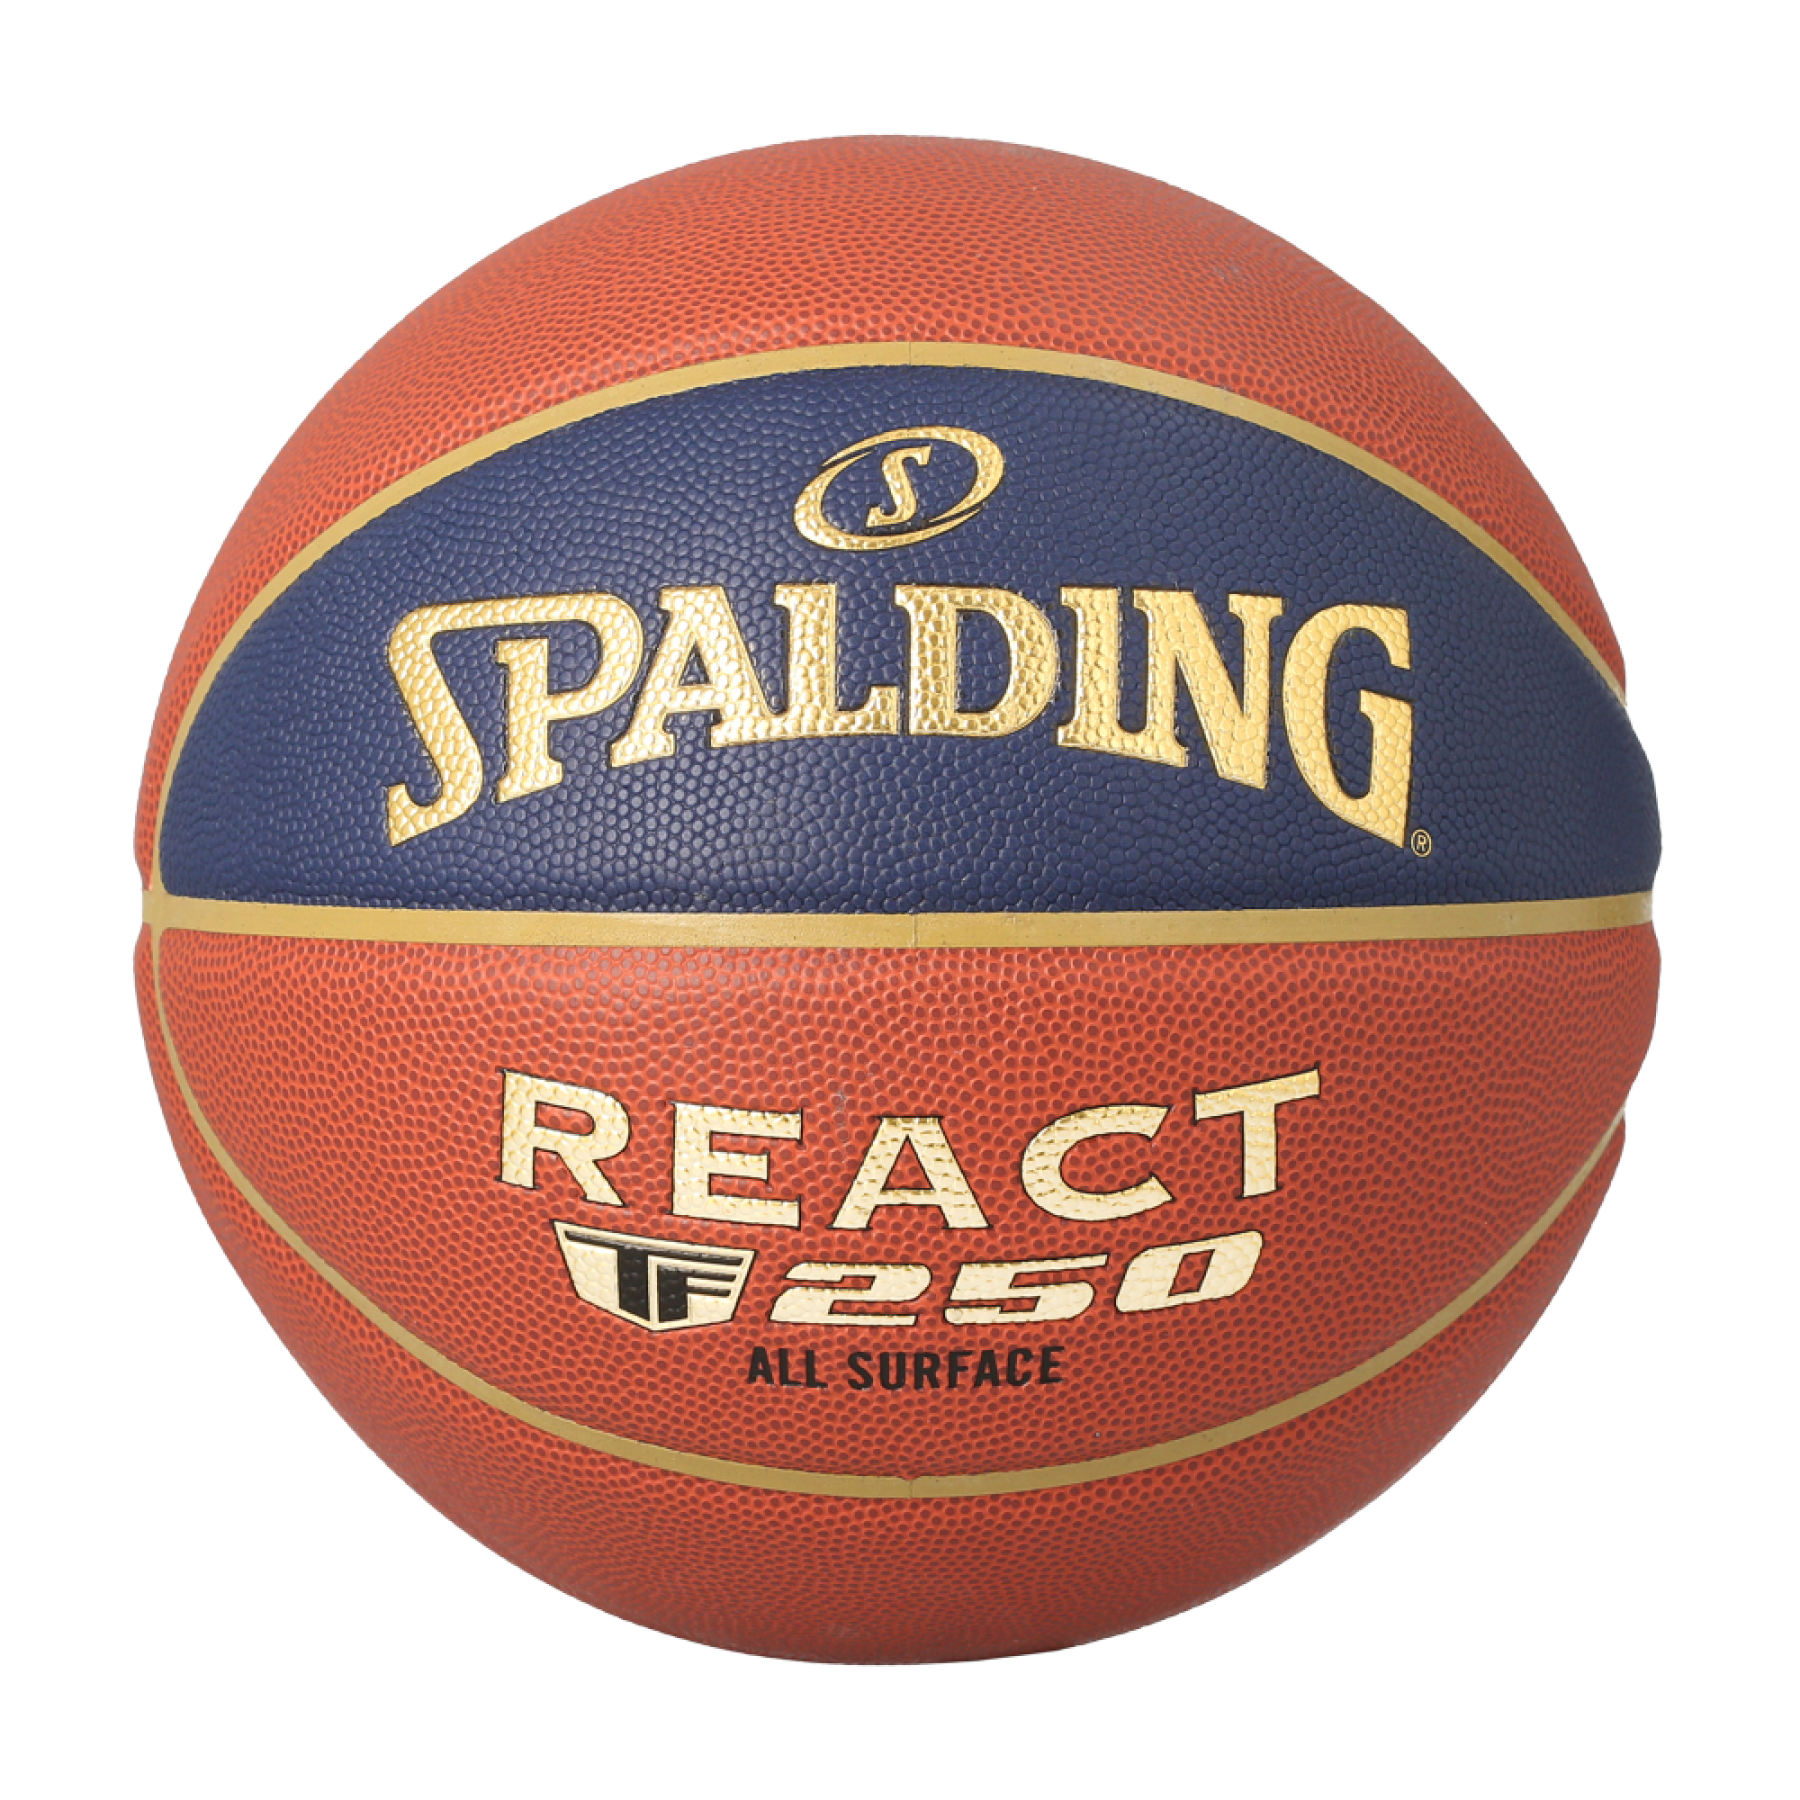 Basketball Spalding React TF-251